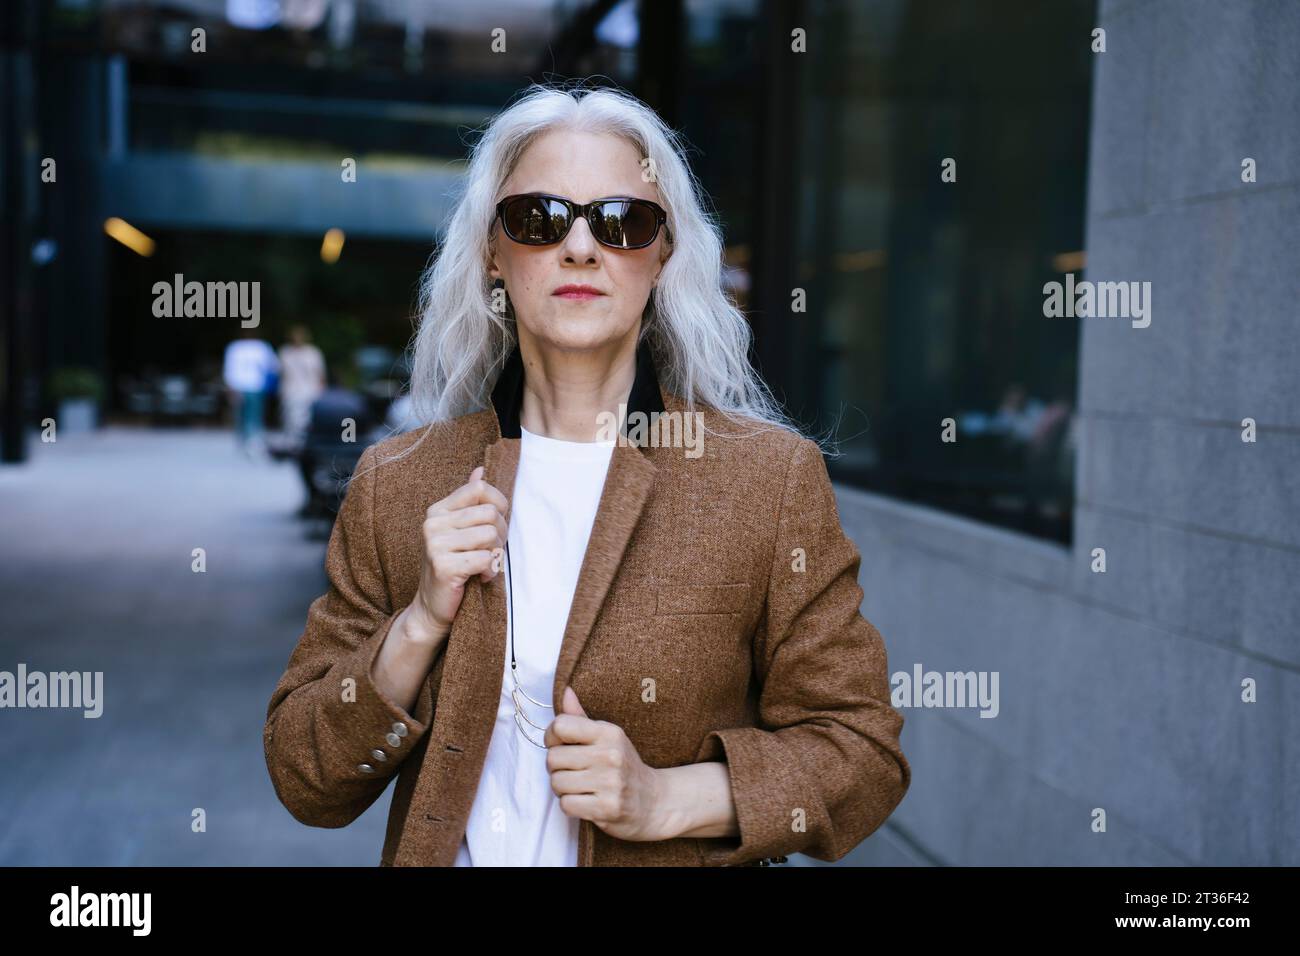 Mature businesswoman wearing brown jacket standing on street Stock Photo